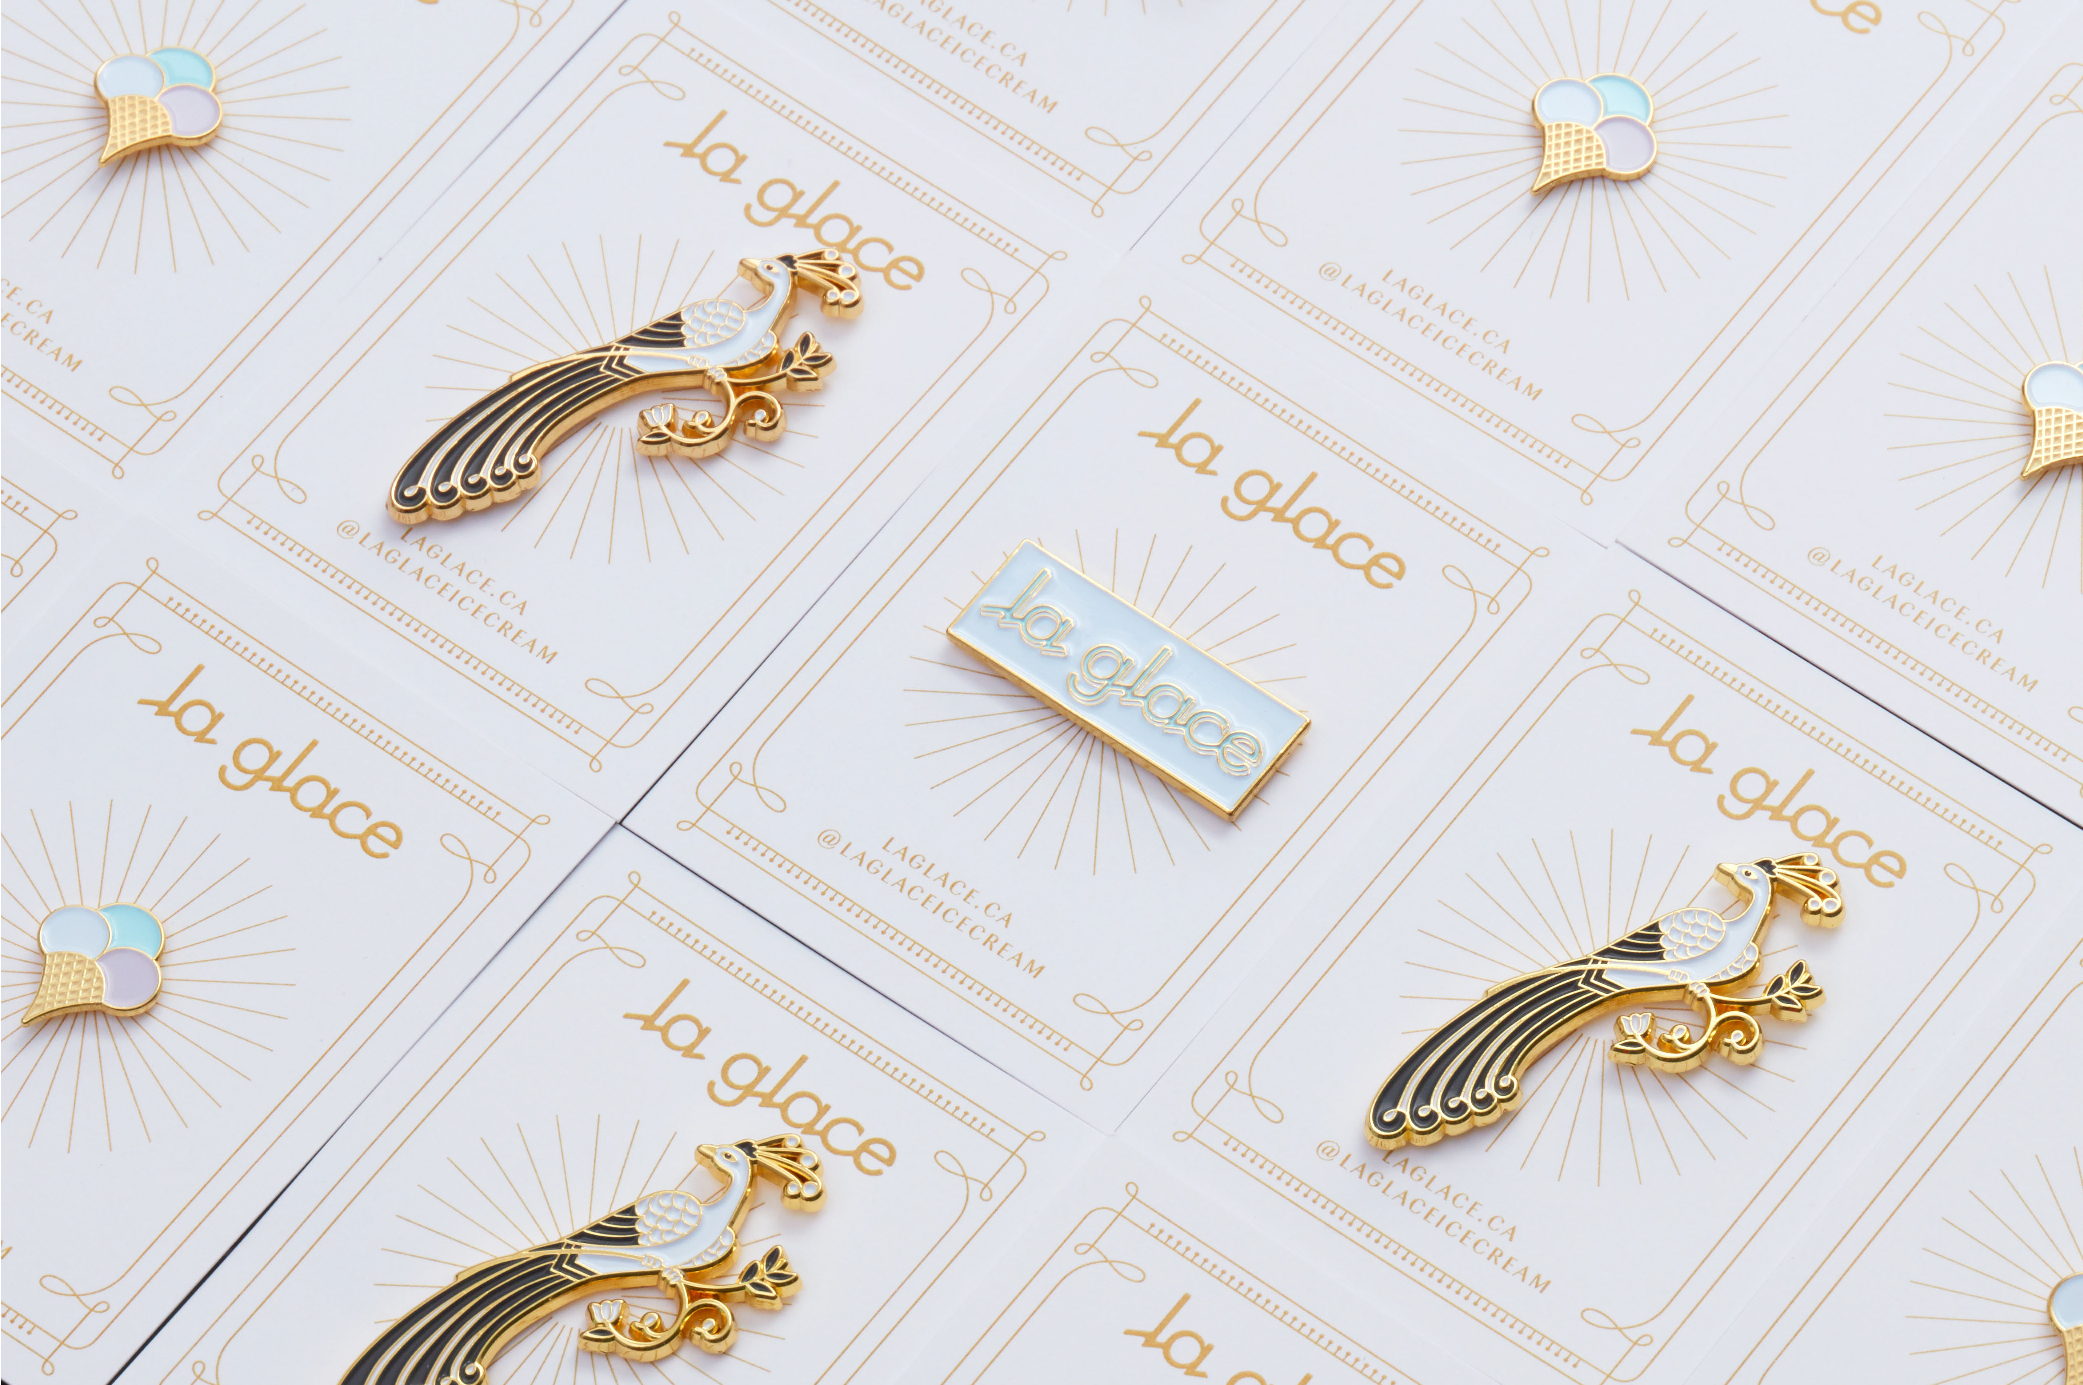 Custom branded enamel pins for La Glace ice cream shop. 